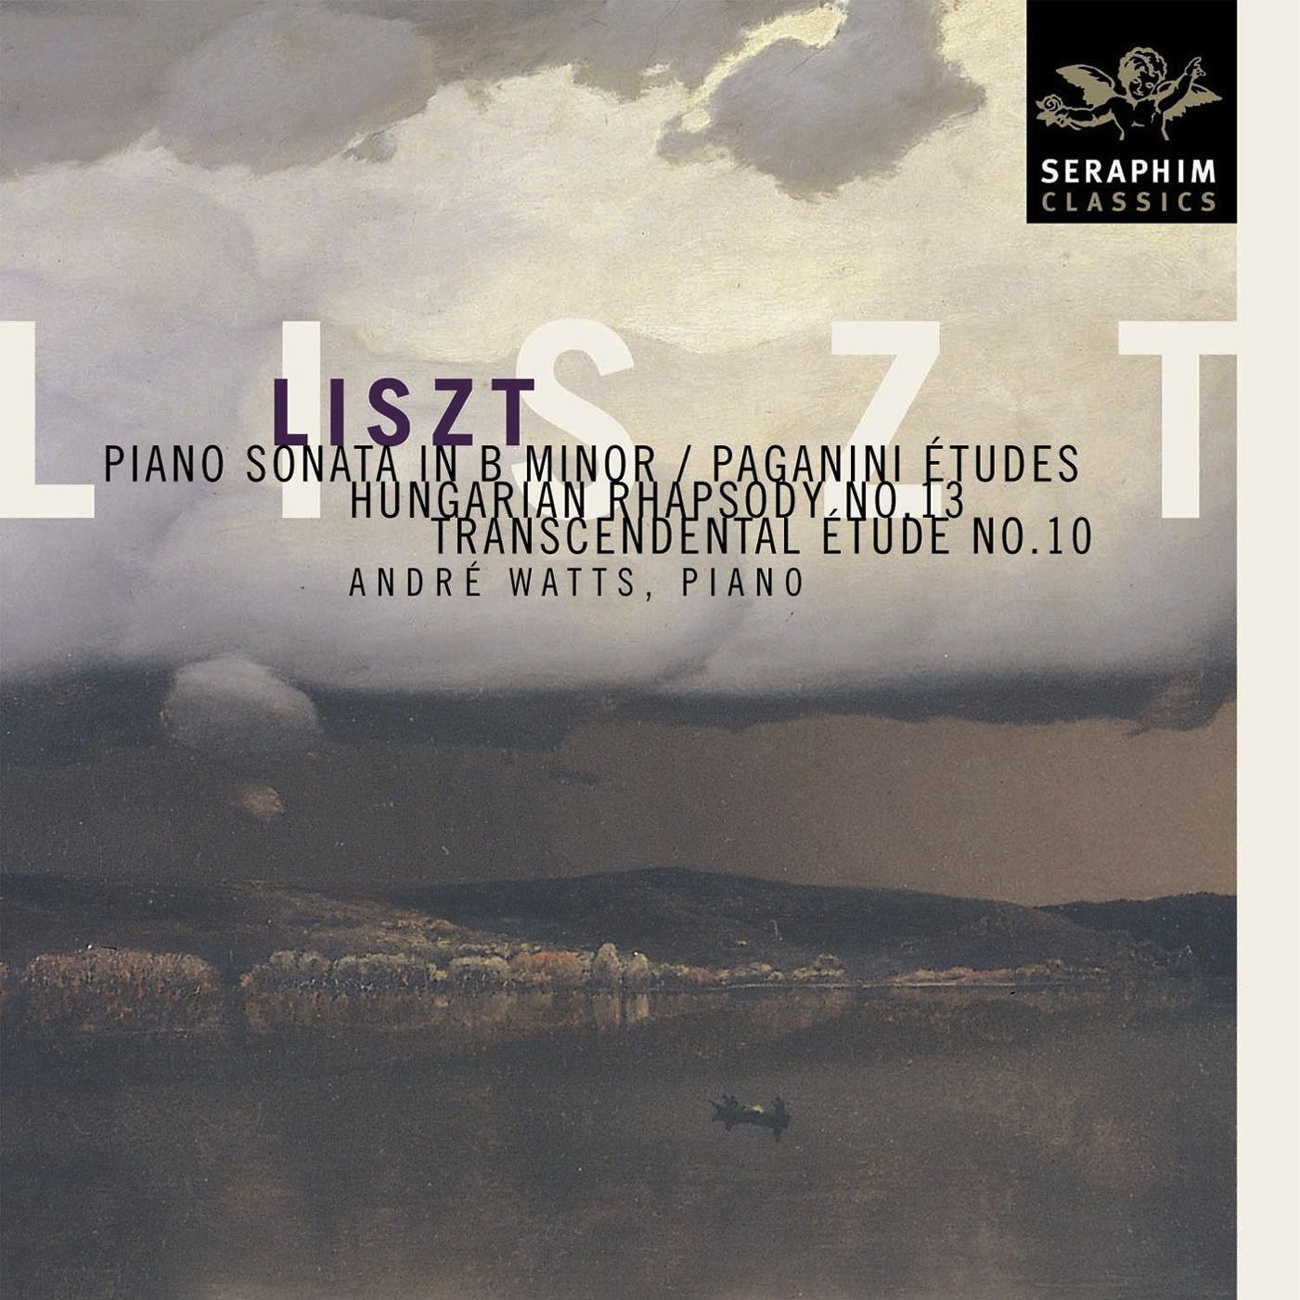 Hungarian Rhapsody No. 13 in A minor (2001 Digital Remaster)